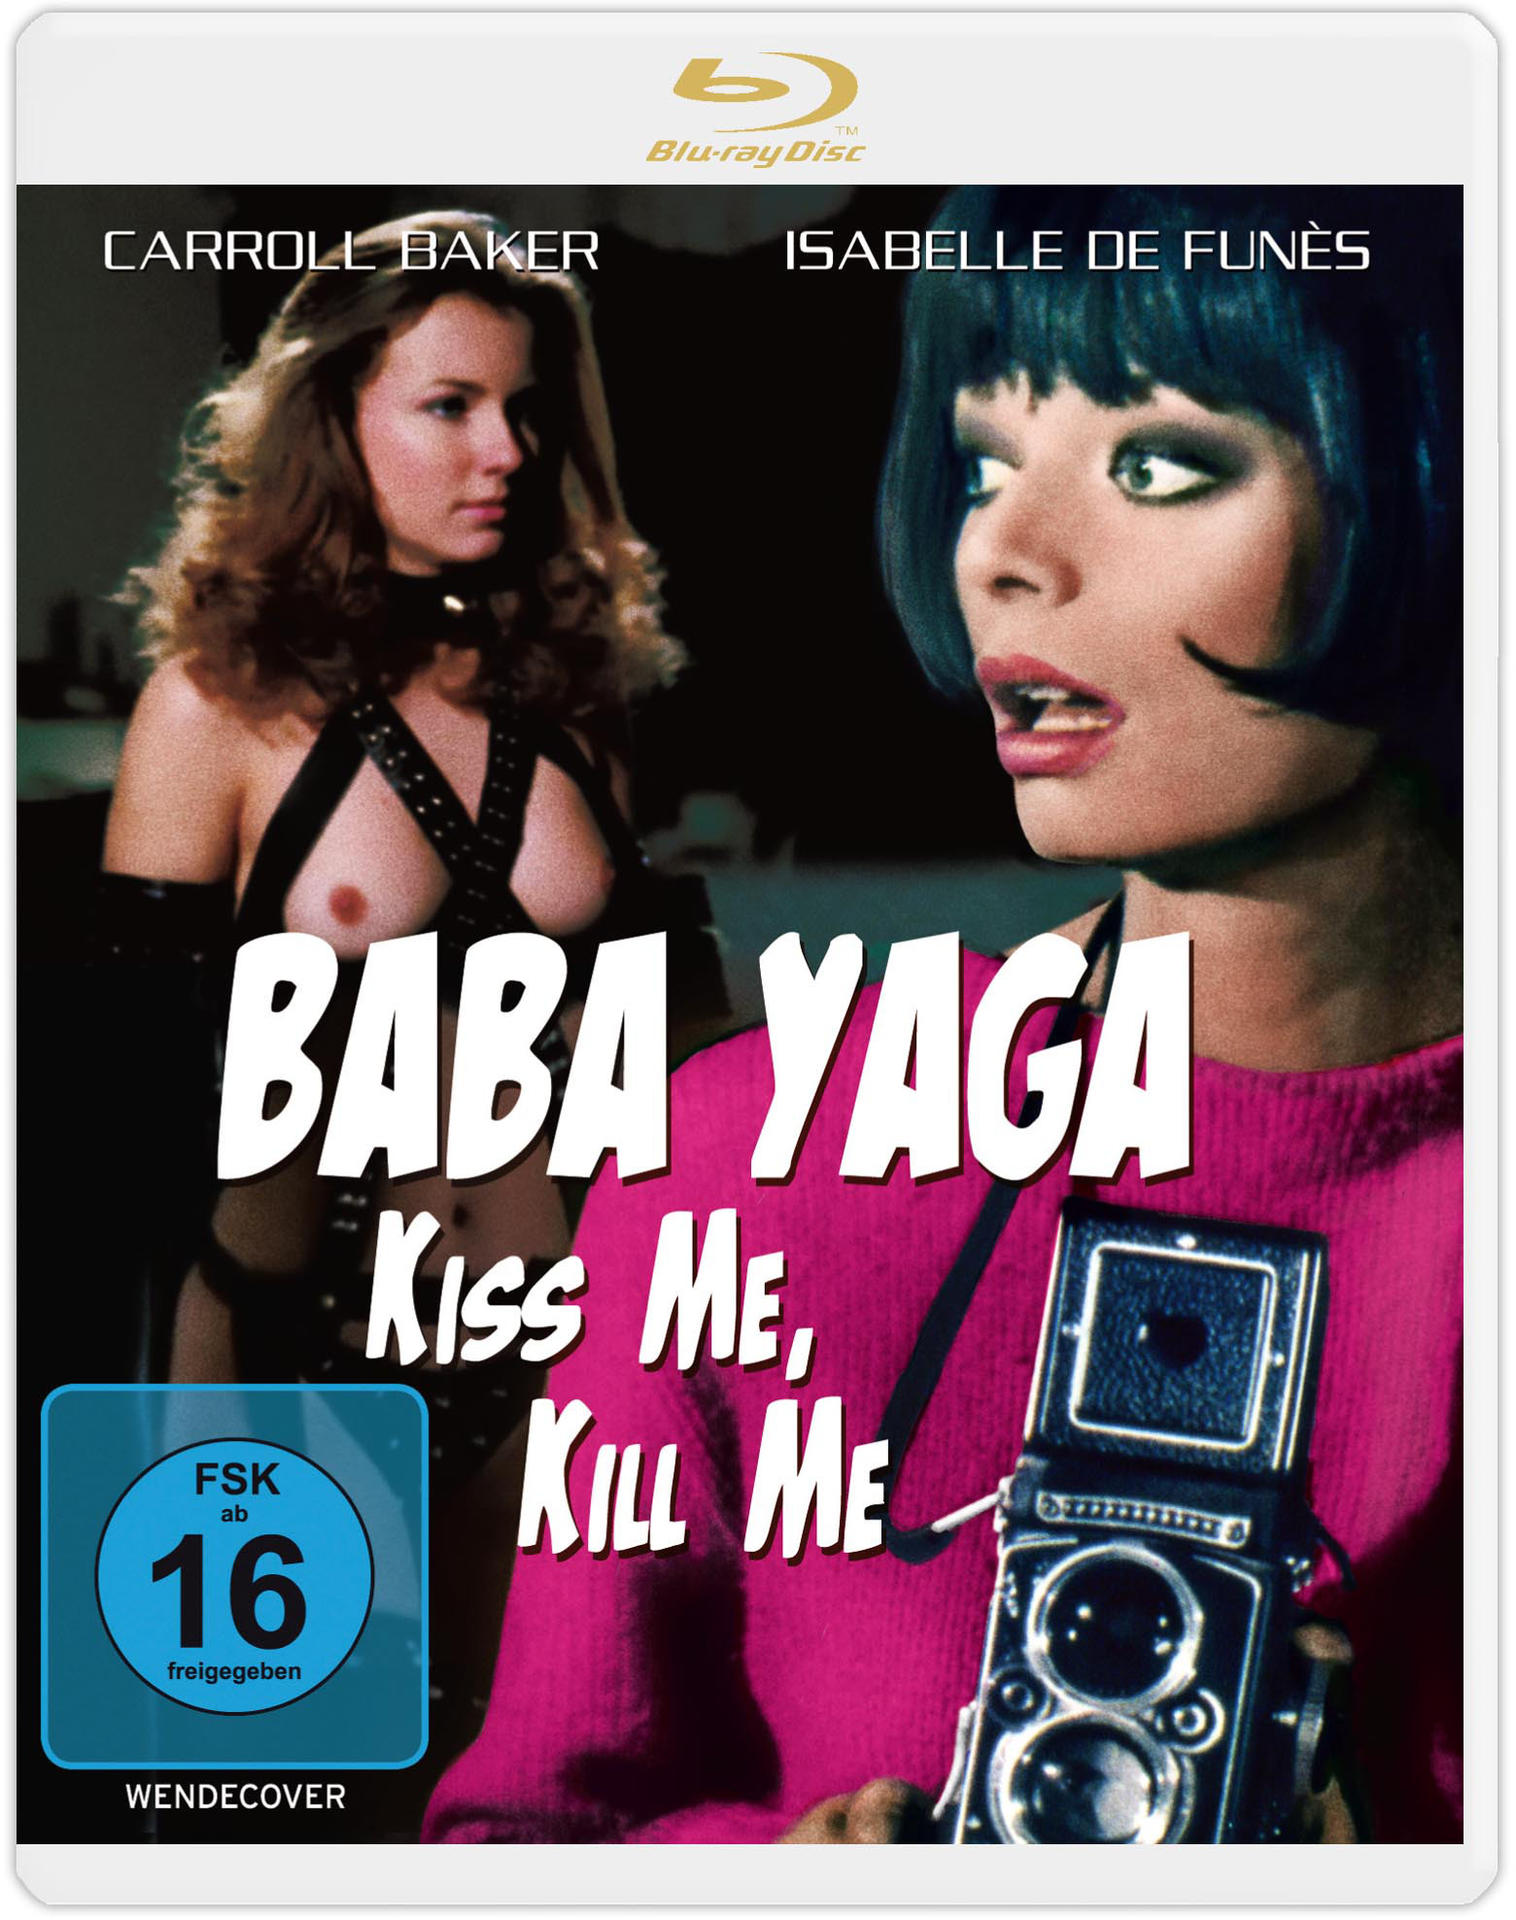 Baba Yaga - Kill Blu-ray Me Kiss Me